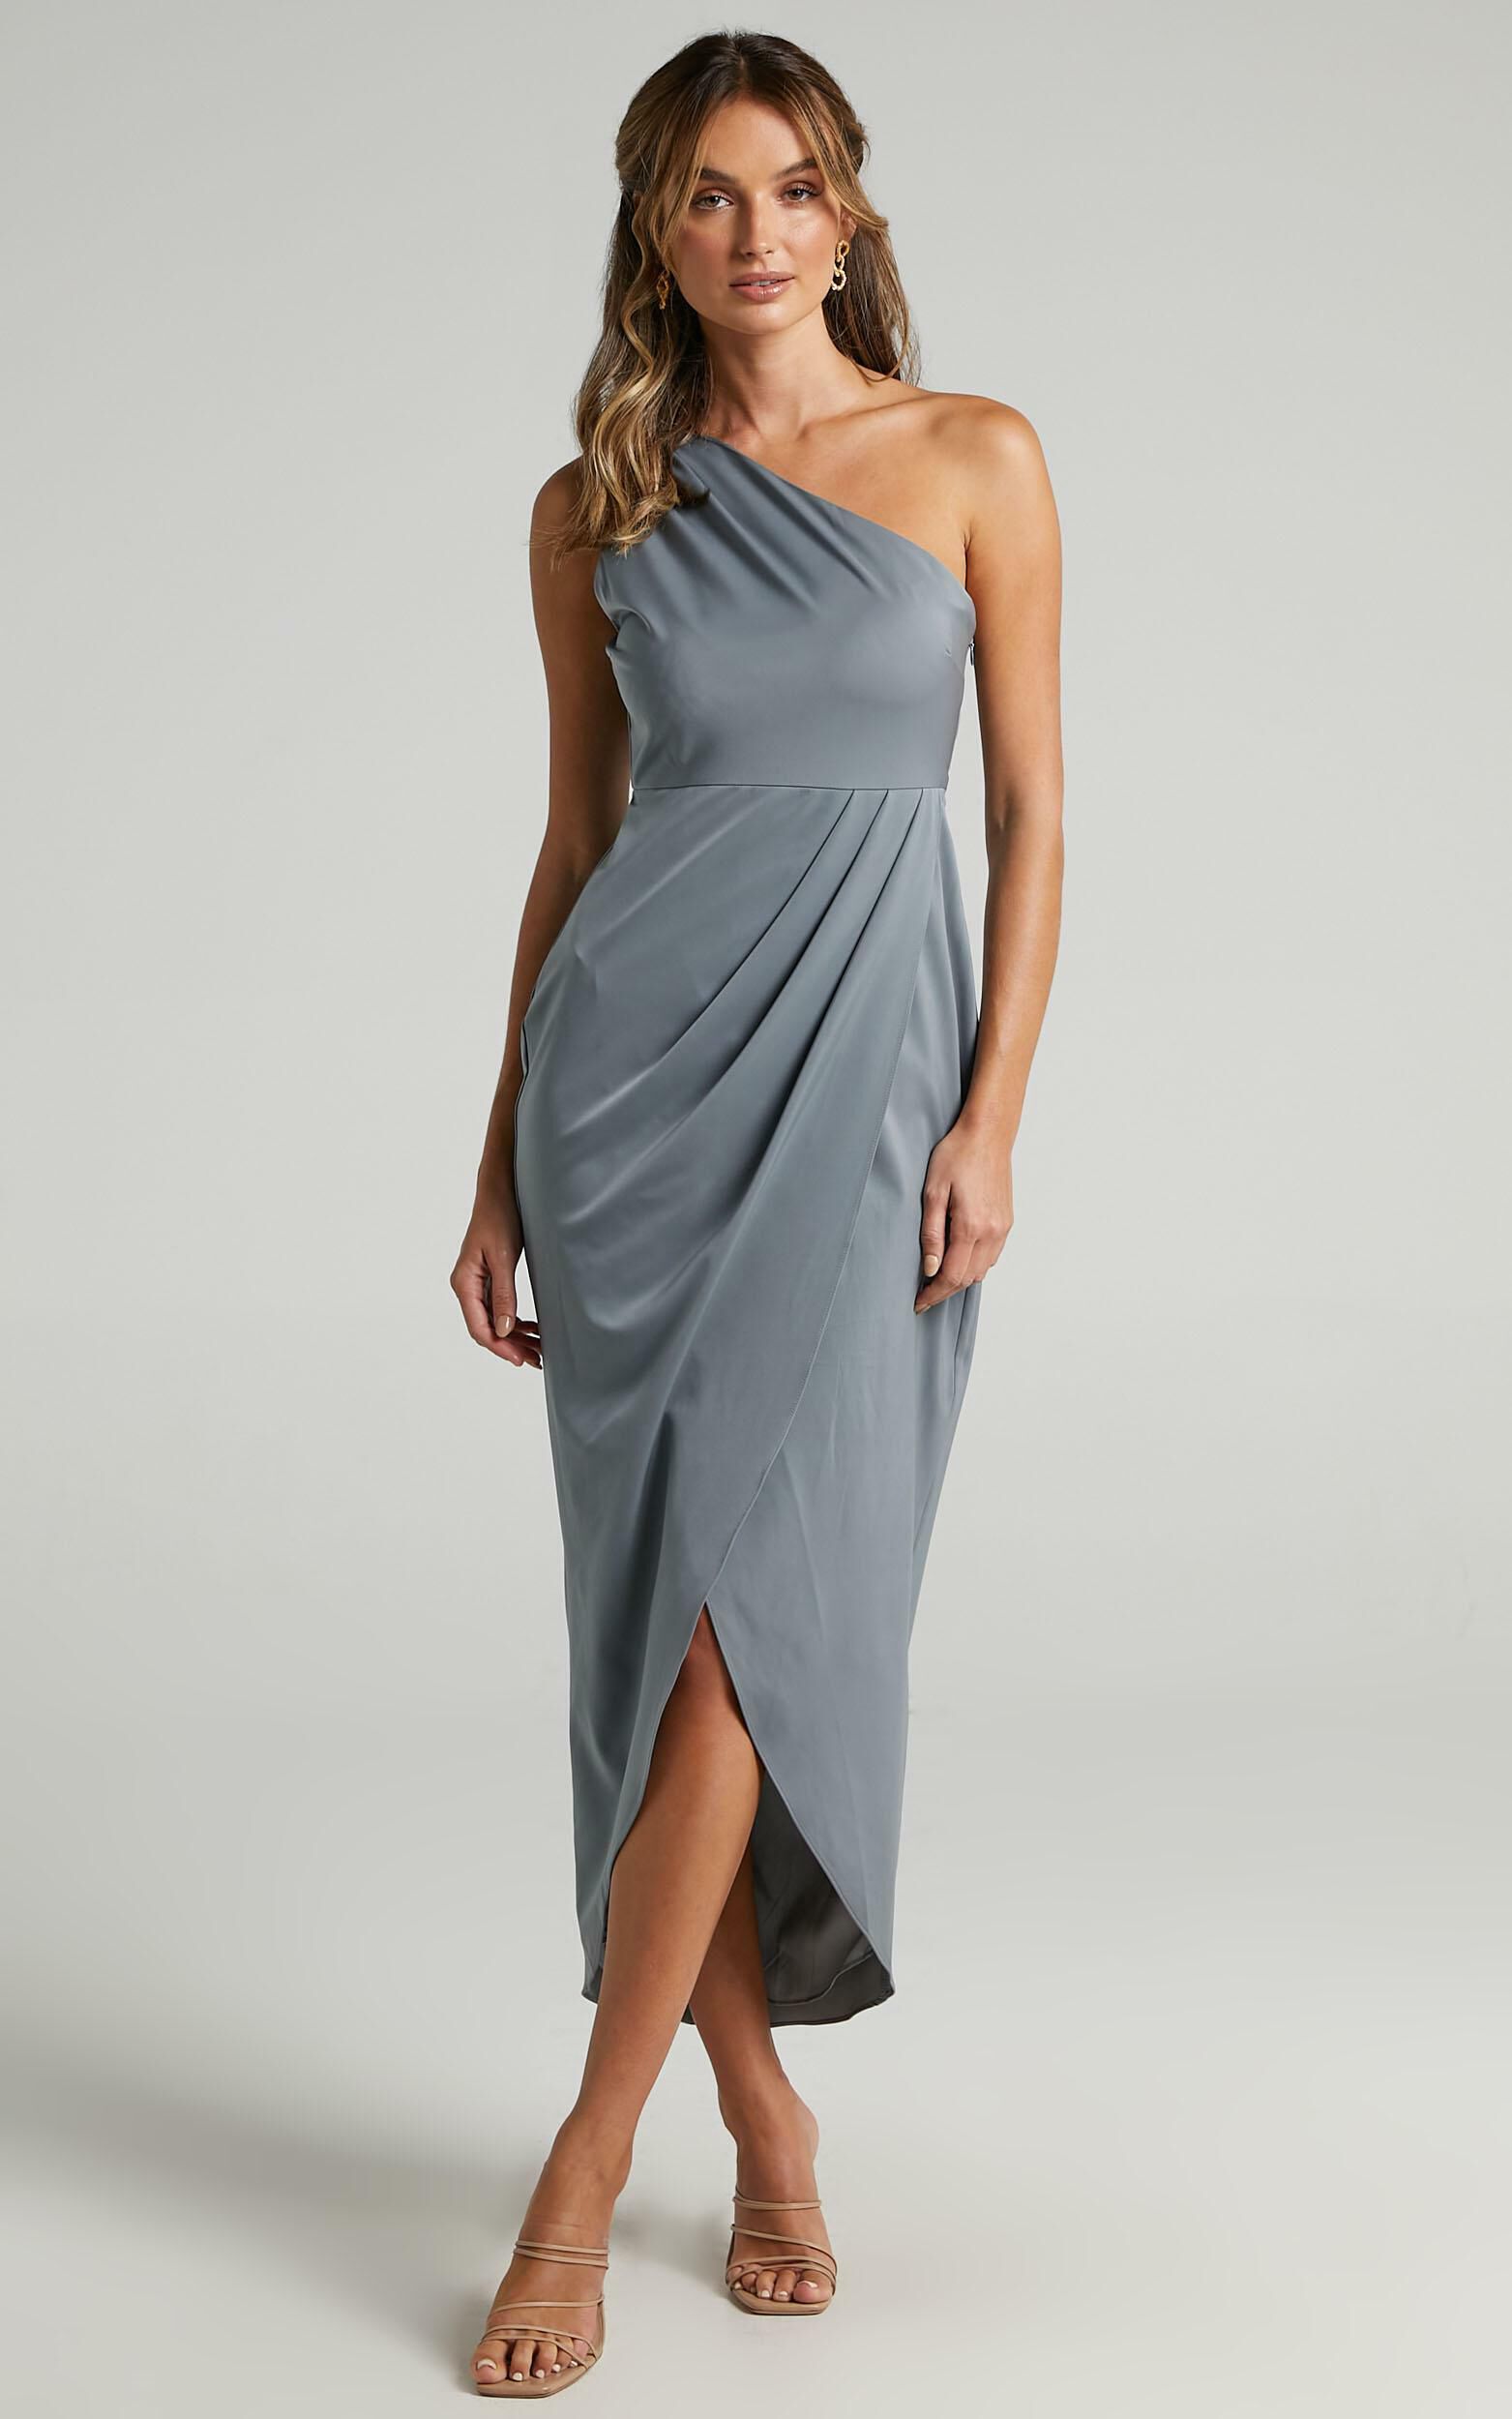 Felt So Happy Midi Dress - One Shoulder Drape Dress in Grey - 20, BLU3